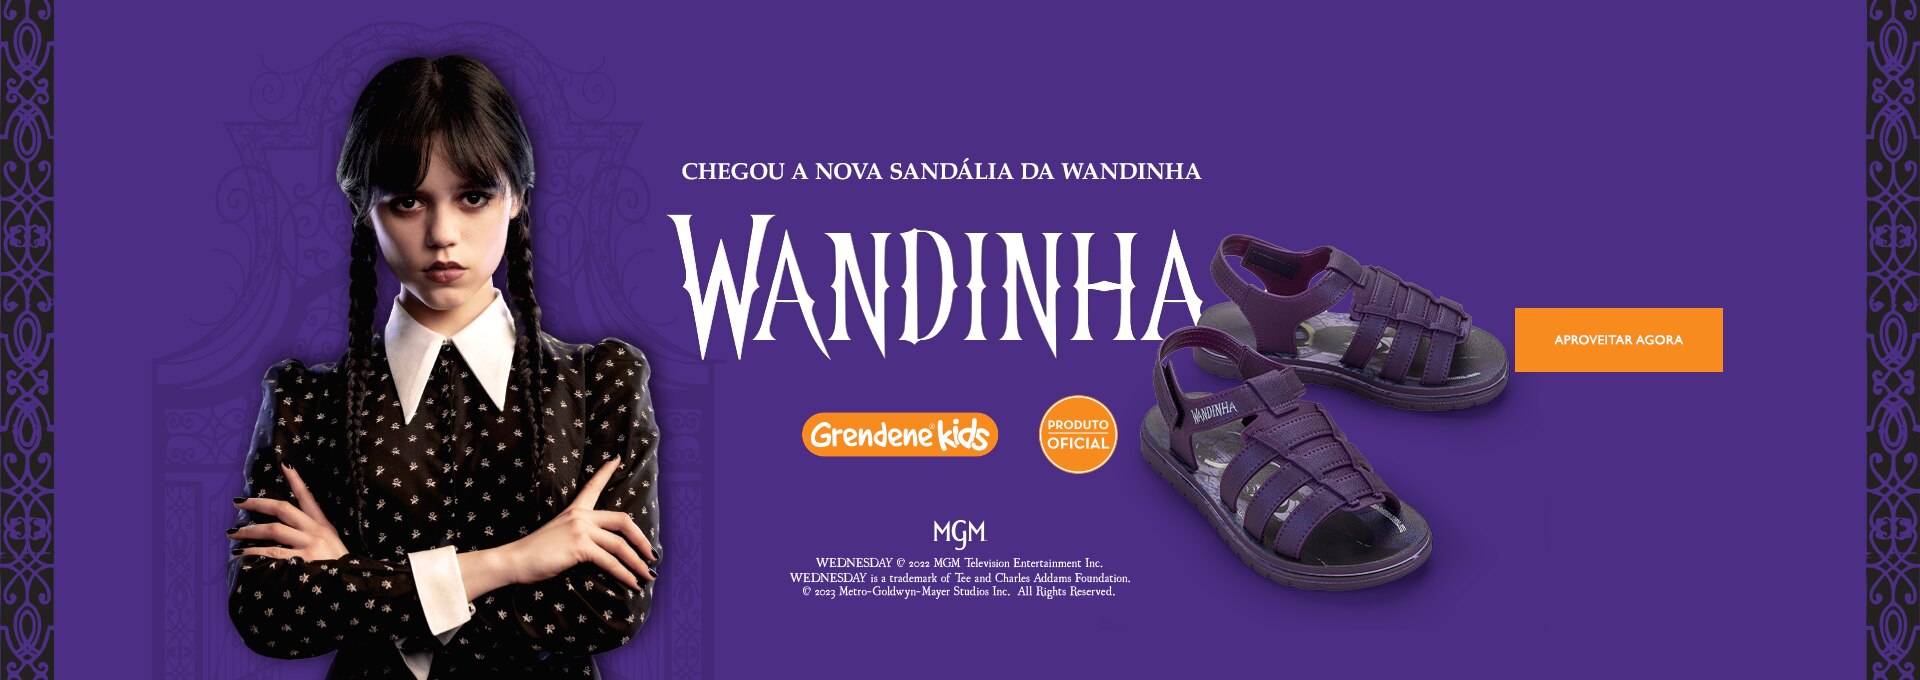 Grendene Kids Sandália Wandinha